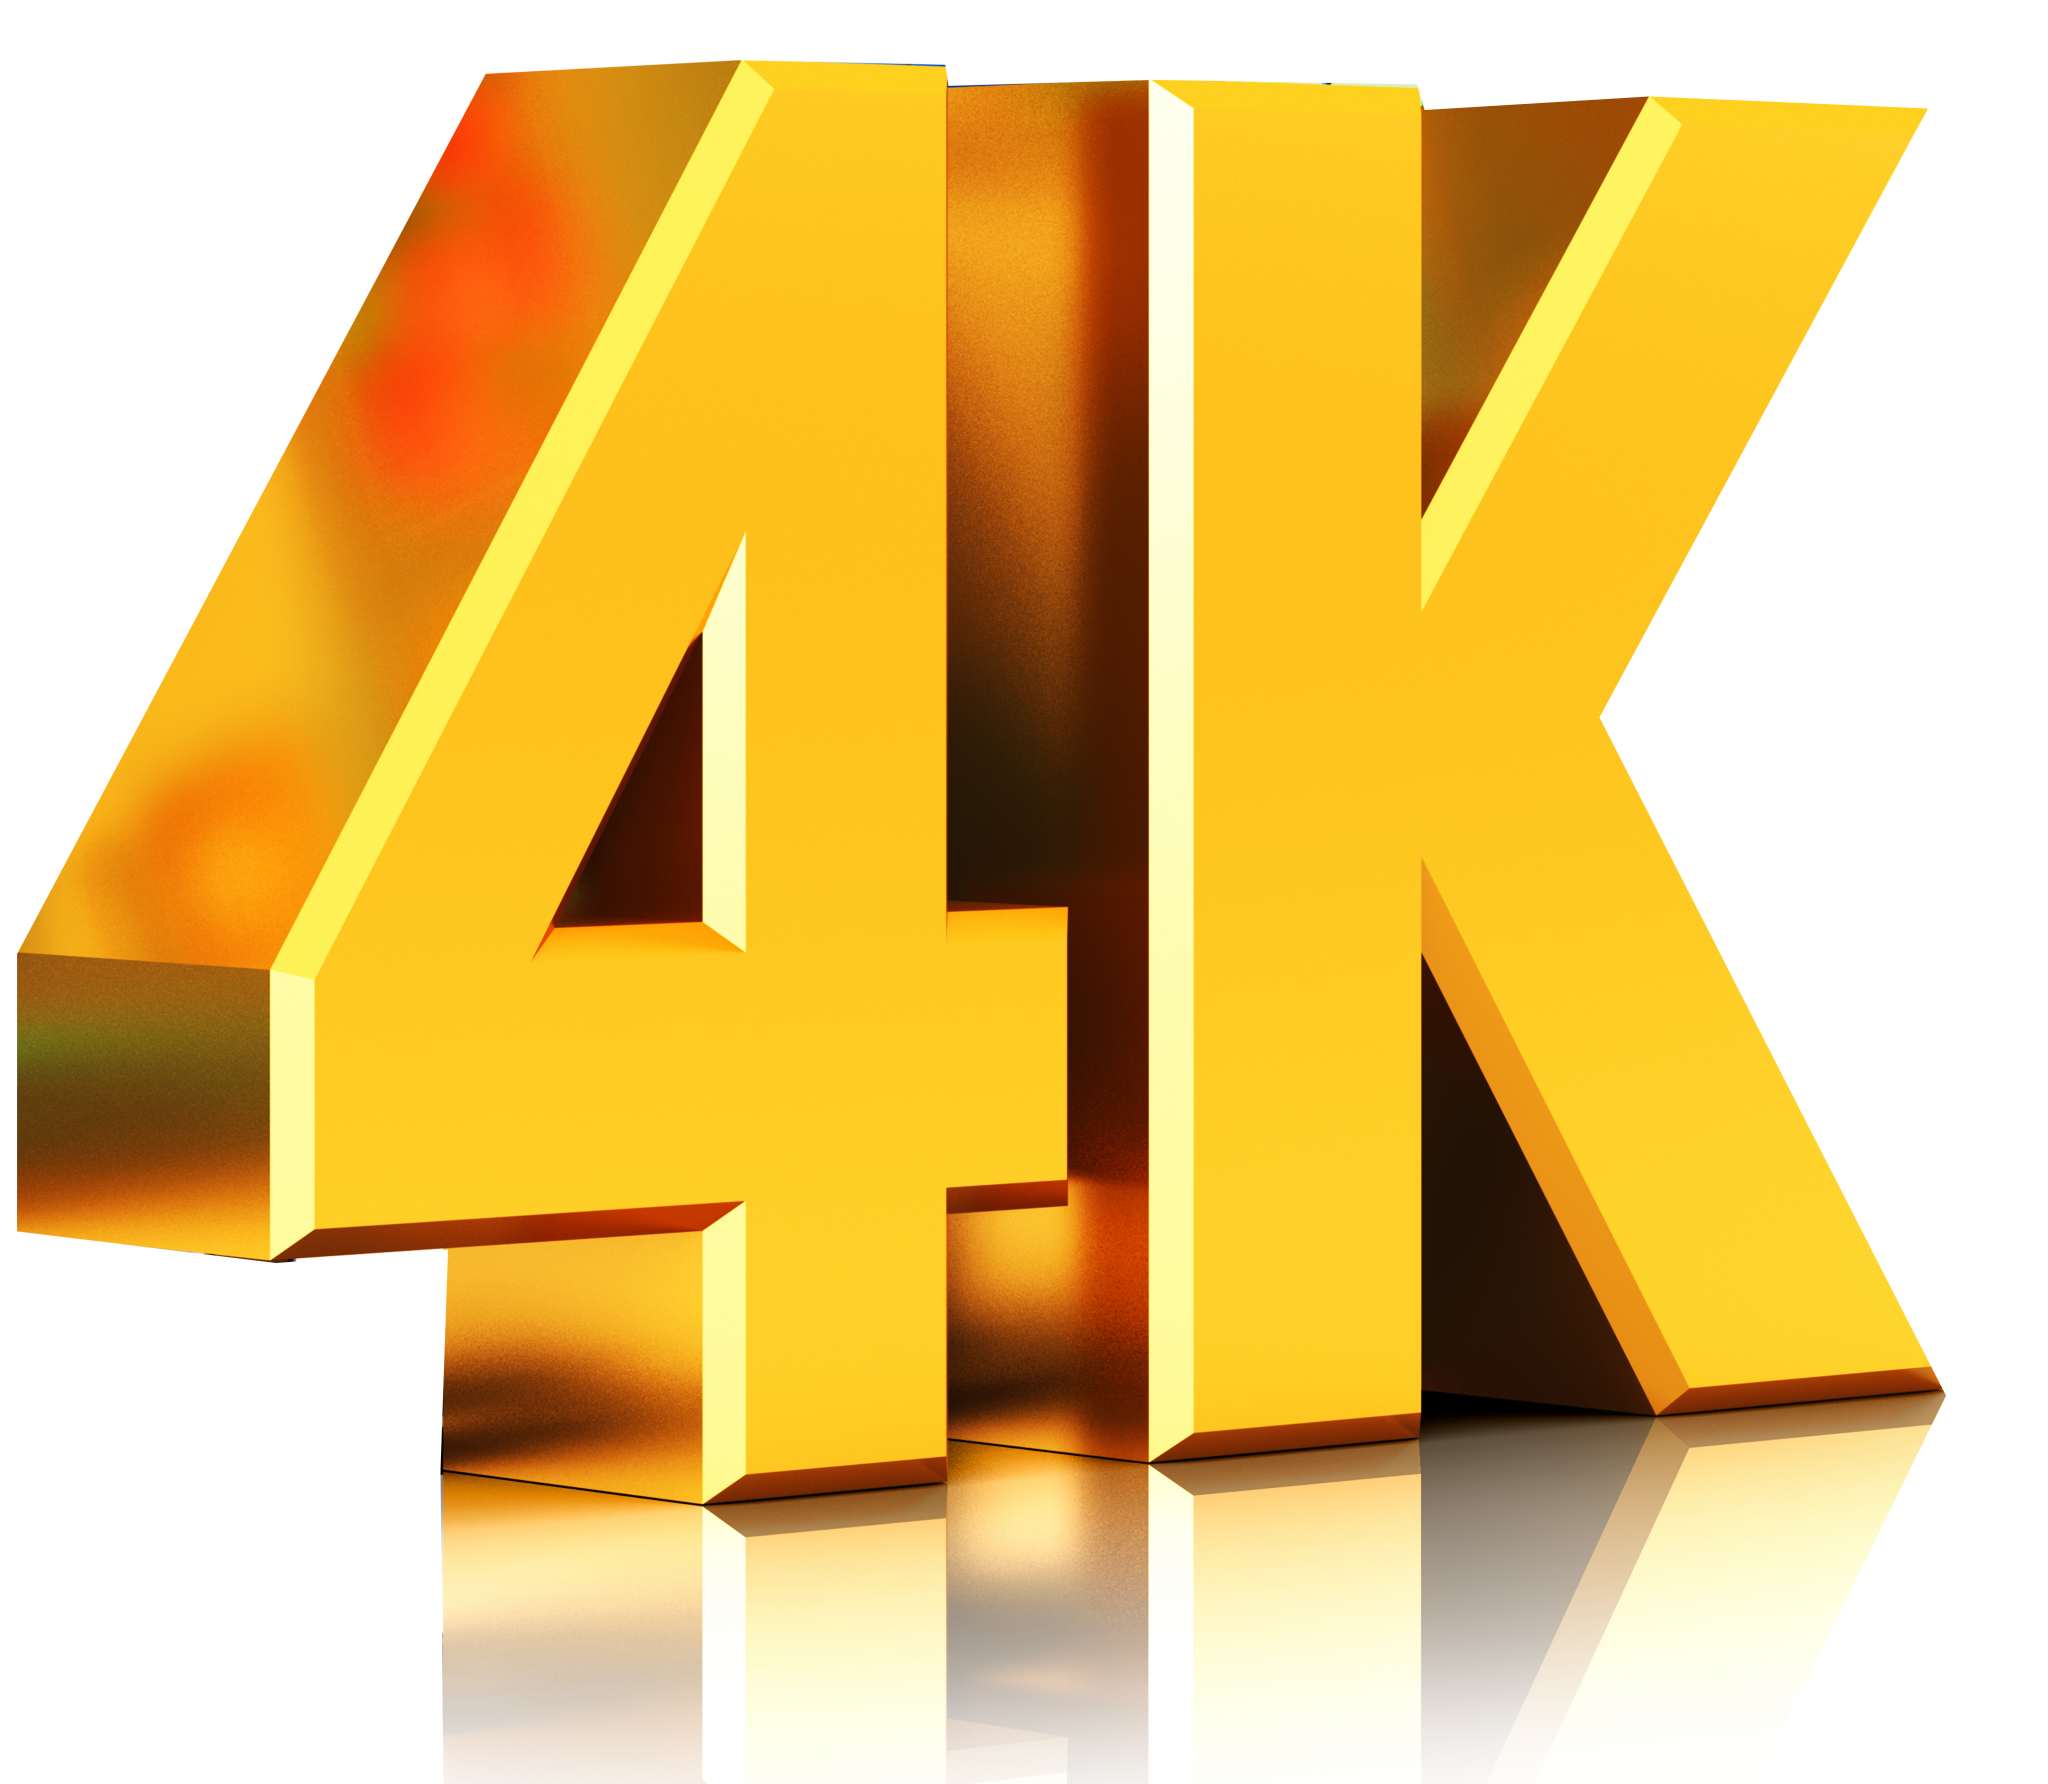 4K Logo